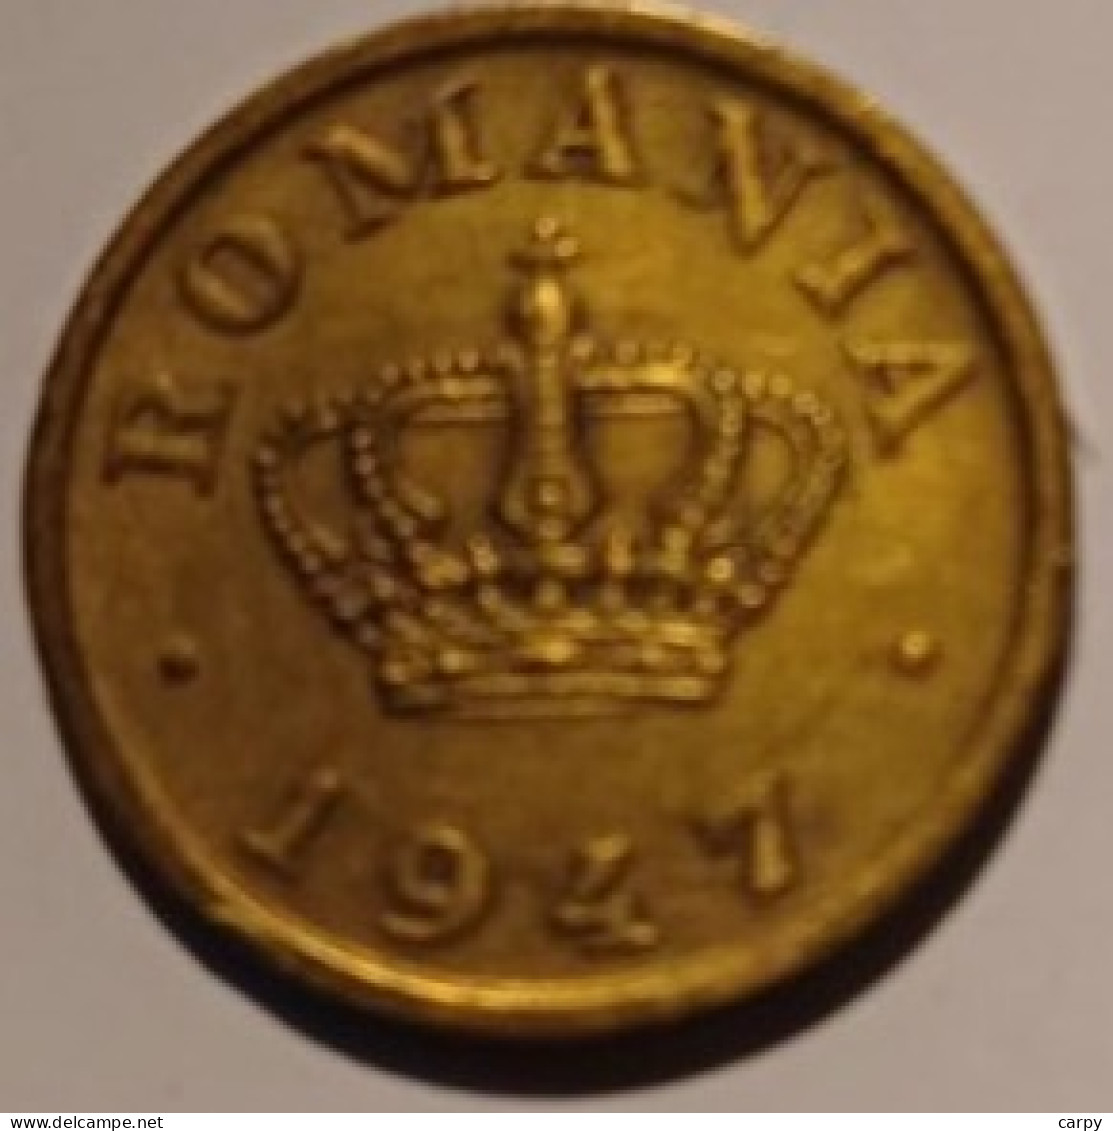 ROMANIA 50 Bani 1947 / King Michael I / Very Nice Looking / RARE - Roumanie